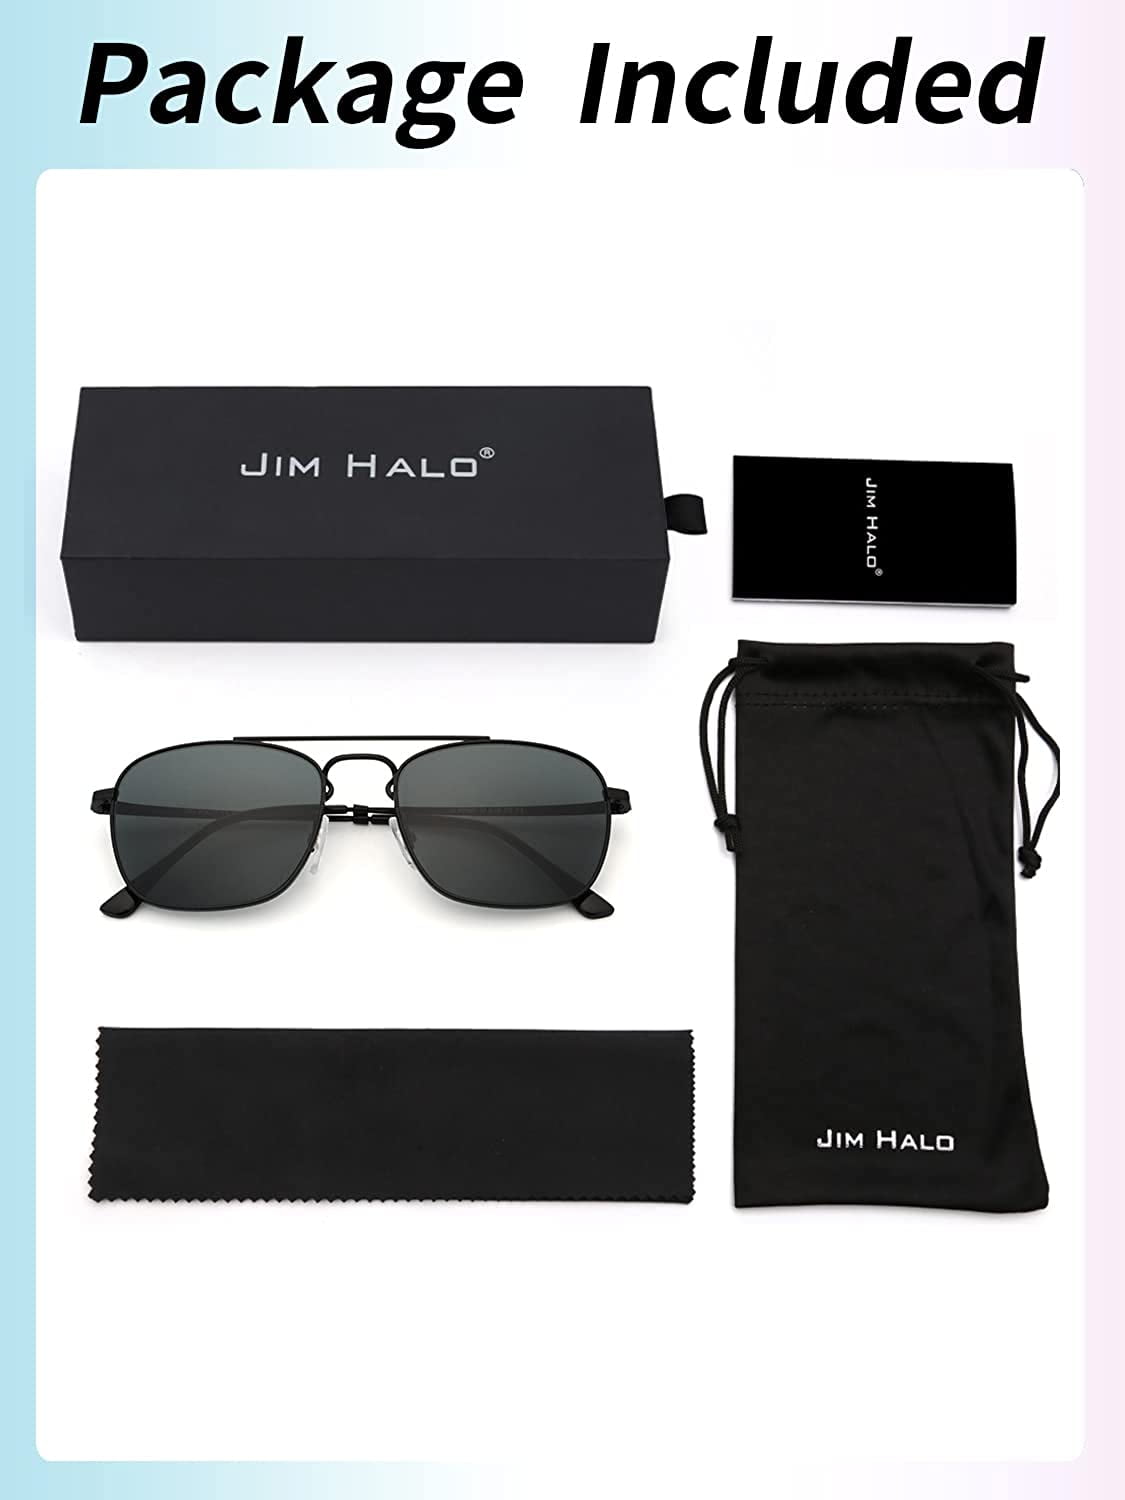 JIM HALO Retro Square Aviator Sunglasses Premium Glass Lens Flat Eyewear Men Women (Black / Grey) - Walmart.com